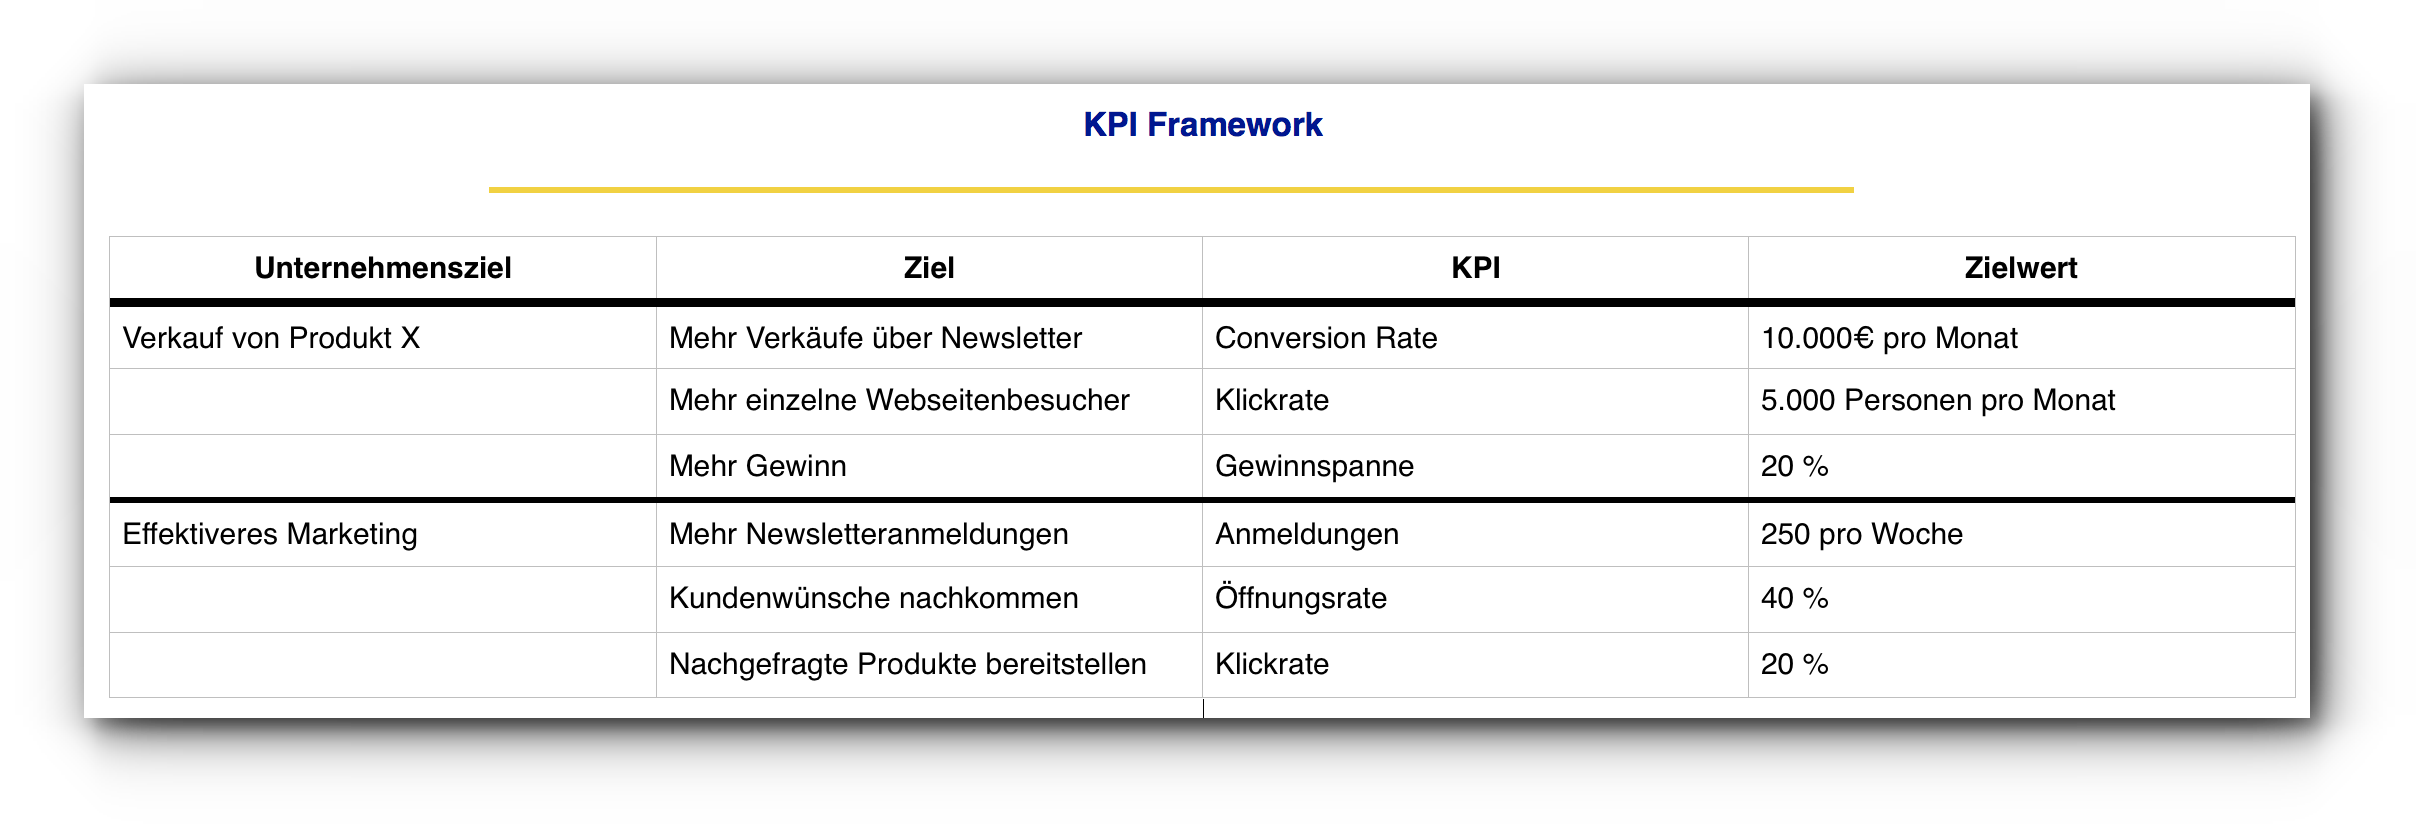 KPI Framework für A/B Testing